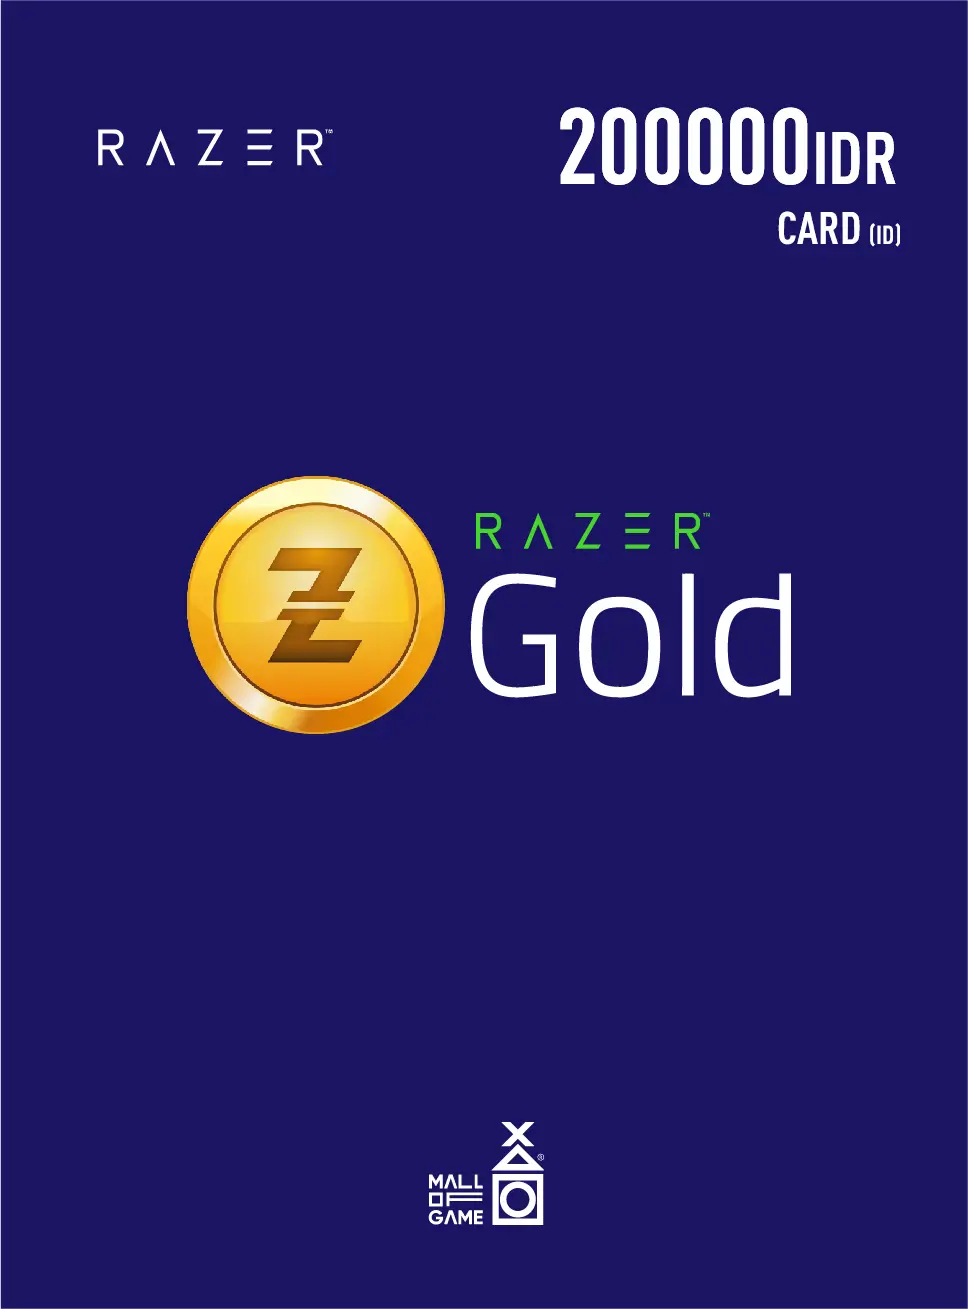 Razer Gold IDR200,000 (ID)